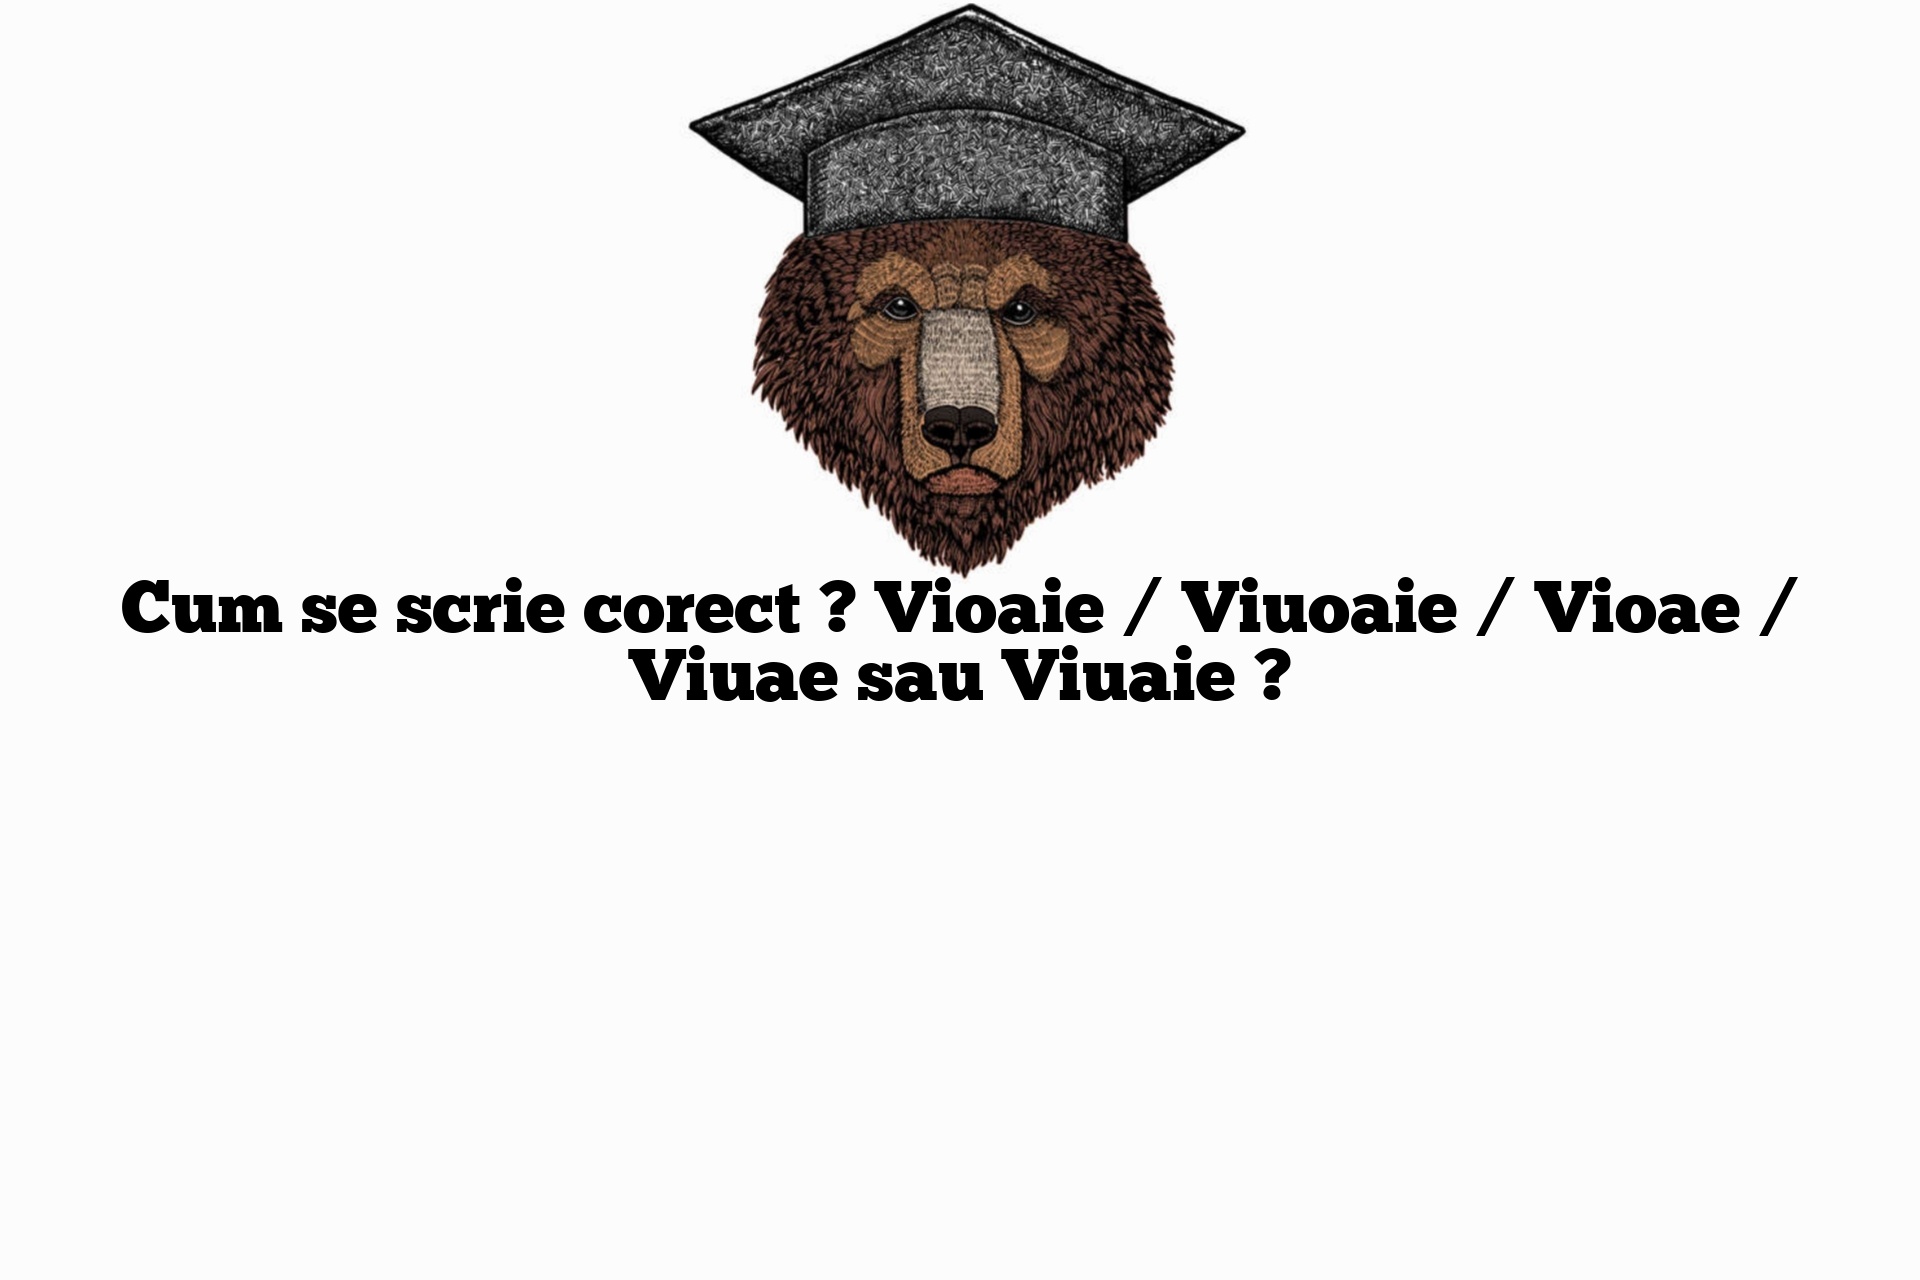 Cum se scrie corect ? Vioaie / Viuoaie / Vioae / Viuae sau Viuaie ?